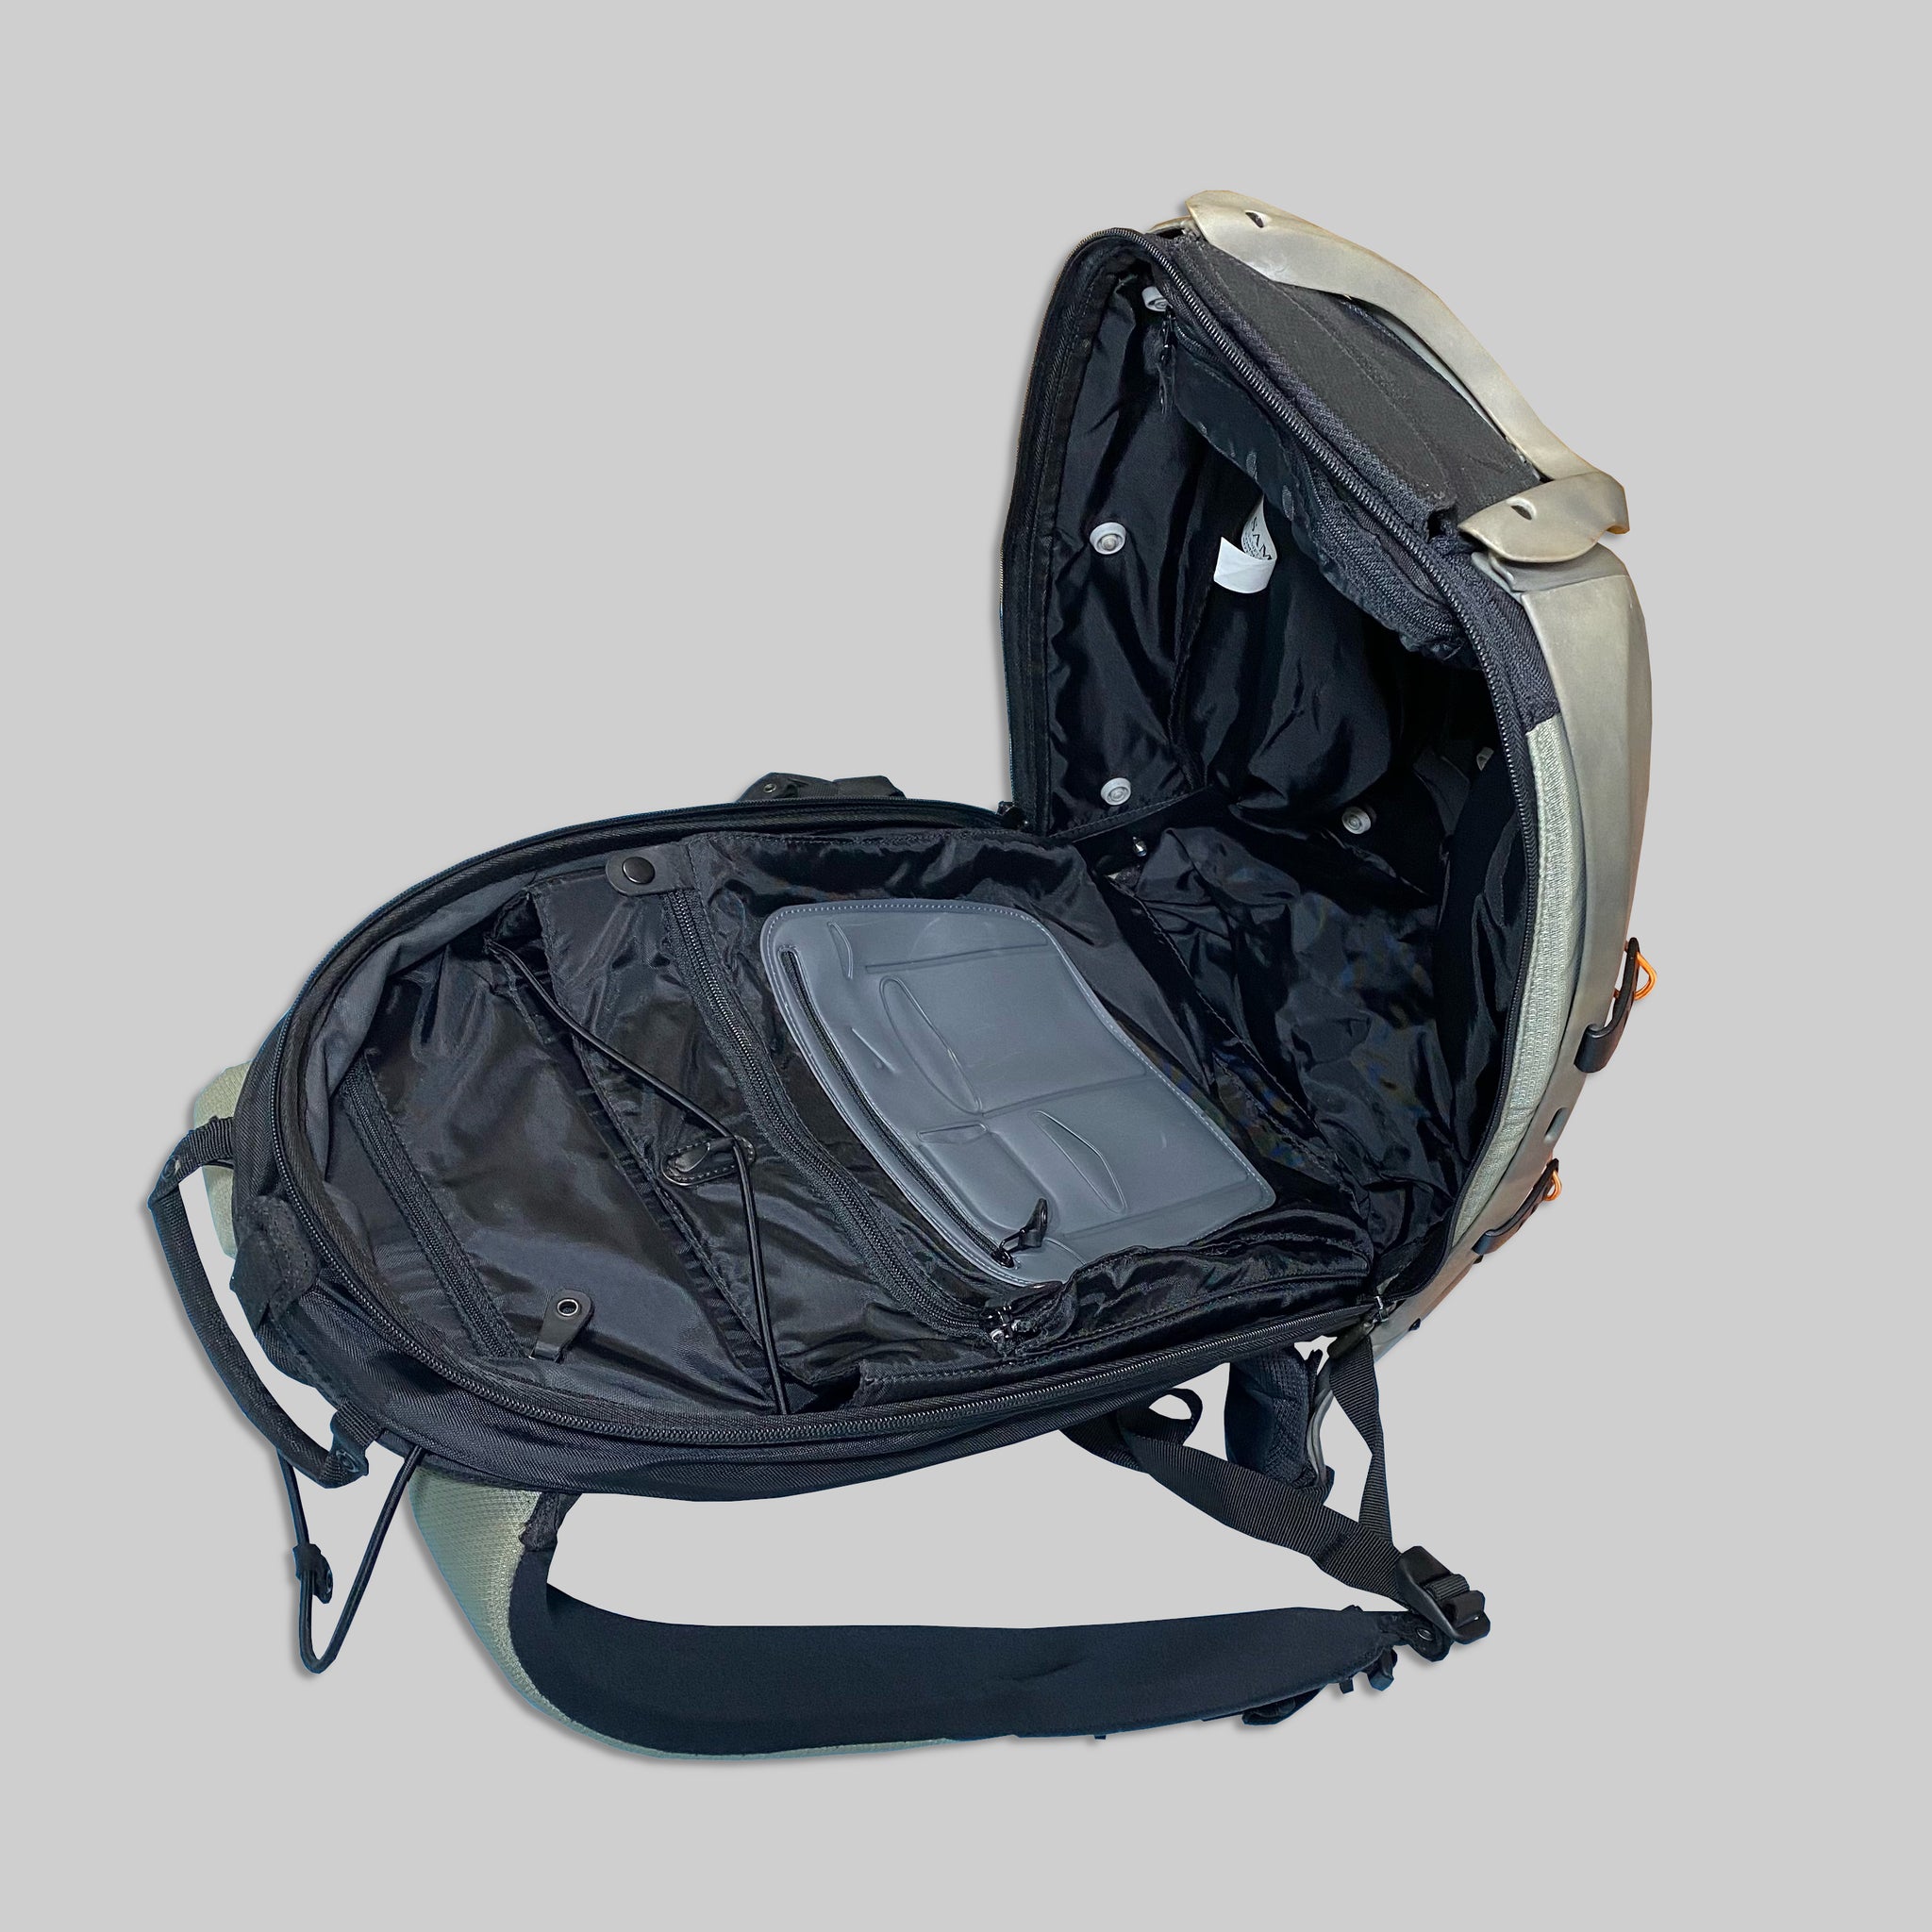 00’S Nike epic hardshell backpack